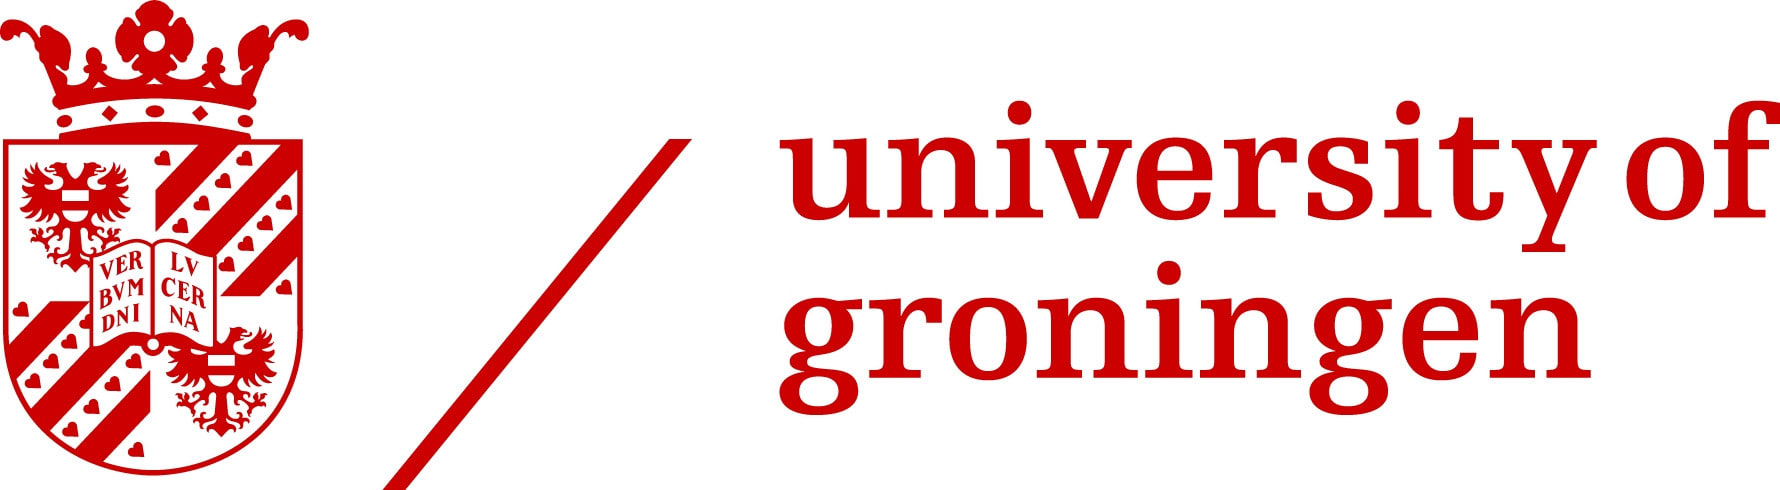 master thesis university of groningen